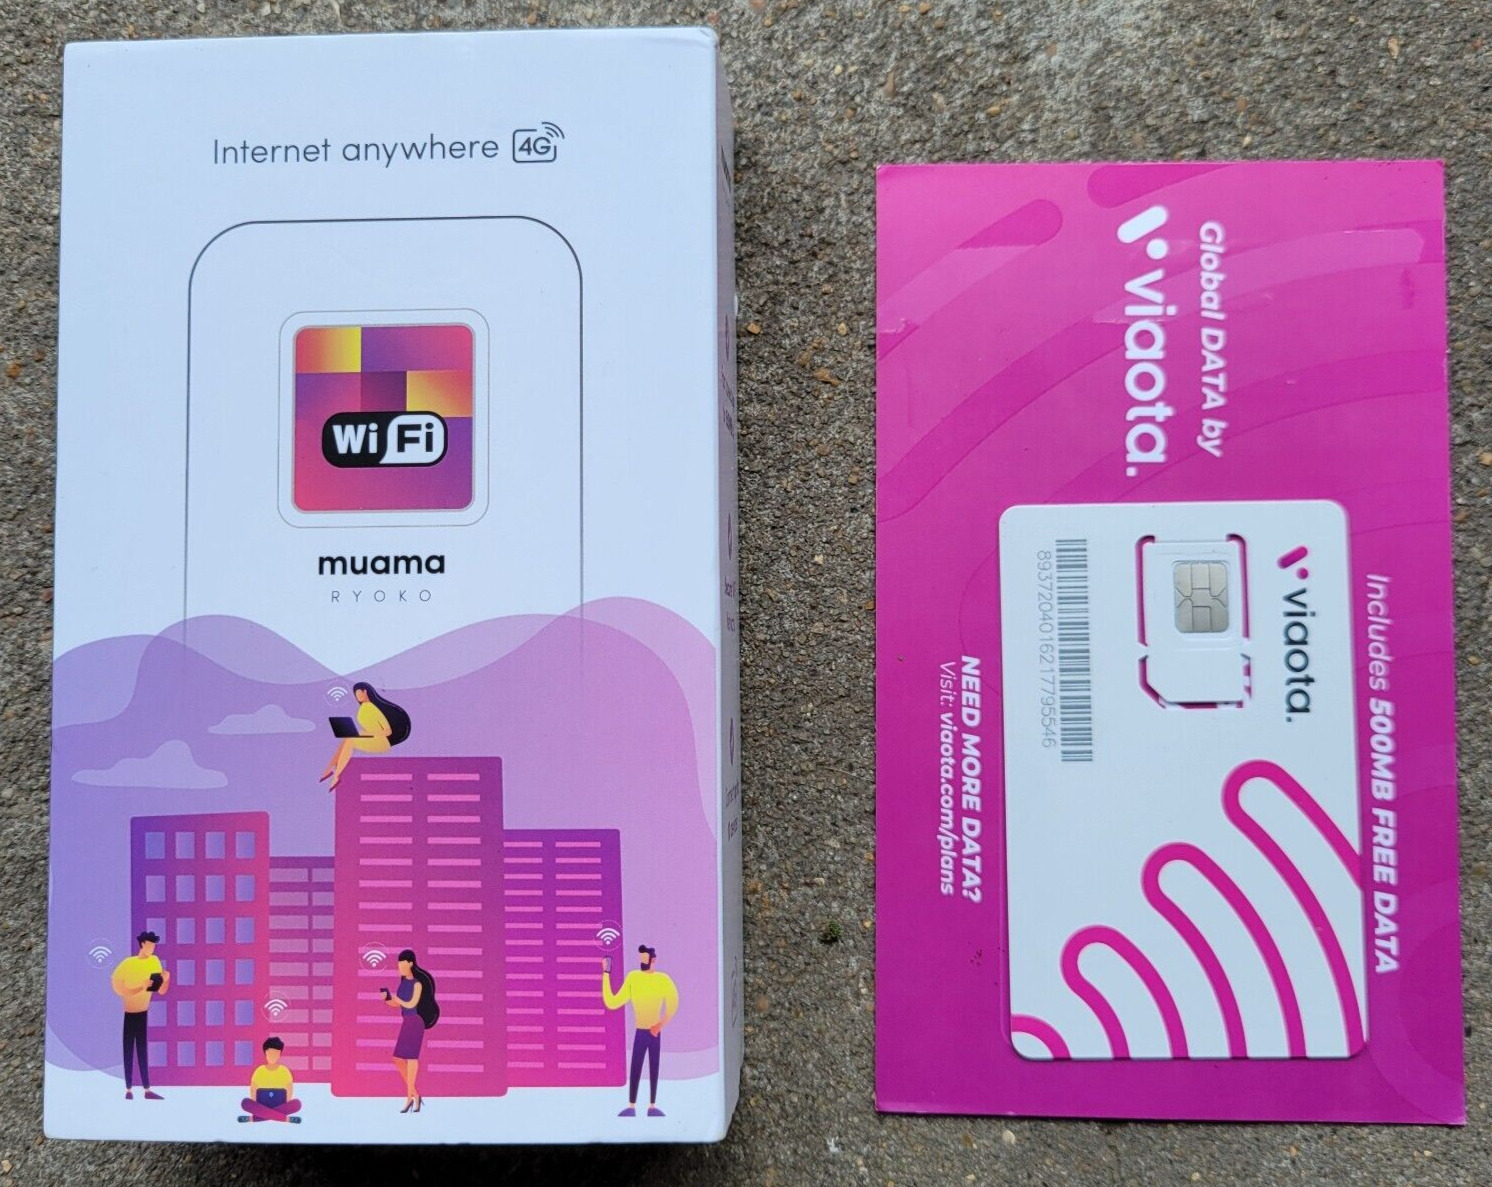 Muama Ryoko Mobile Broadband Portable Wireless WiFi Router 4G-LTE with Card